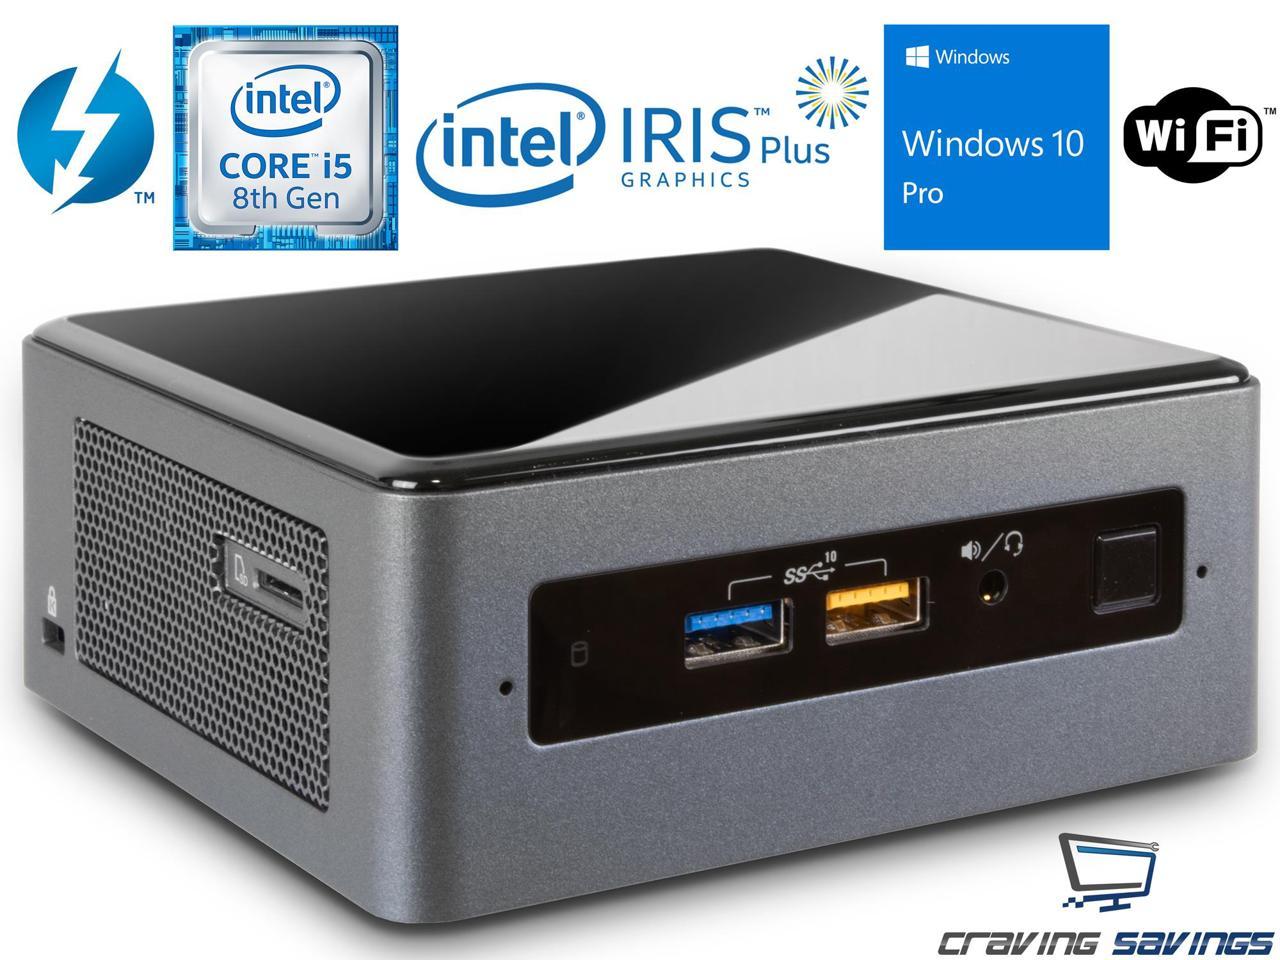 Intel NUC8i5BEH Mini PC/HTPC, Intel Core i5-8259U Up to 3.8GHz, 8GB DDR4, 256GB NVMe SSD, Wifi, Bluetooth 5.0, 4K Support, Dual Monitor Capable, Windows 10 Pro